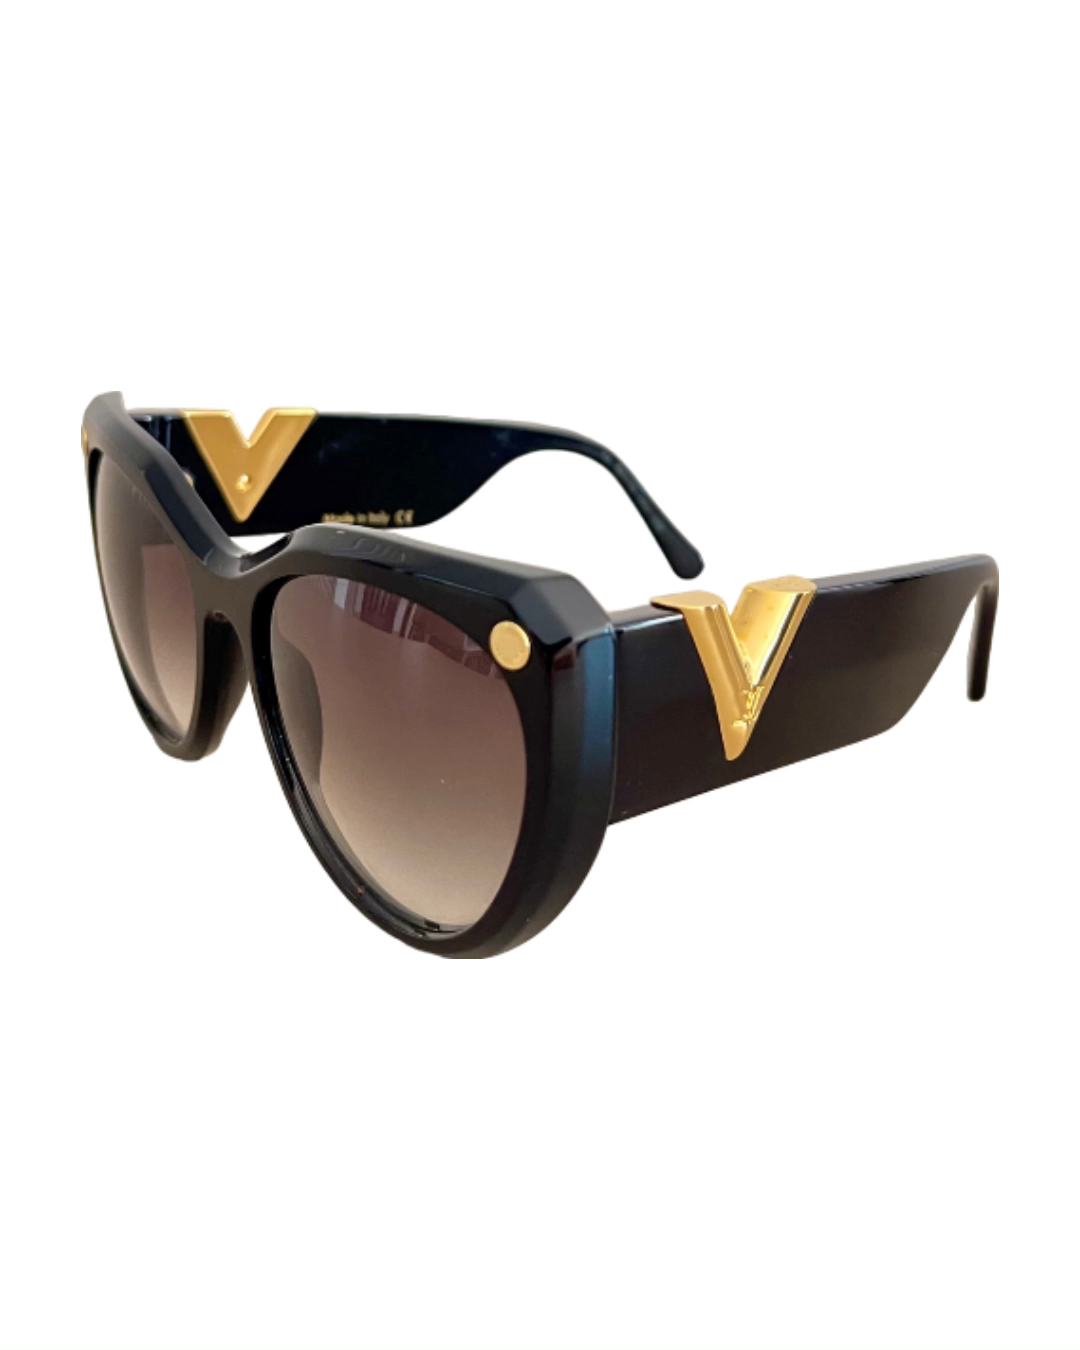 Gafas Louis Vuitton - Avinnato / Luxury Bags PRELOVED / MODA CIRCULAR.